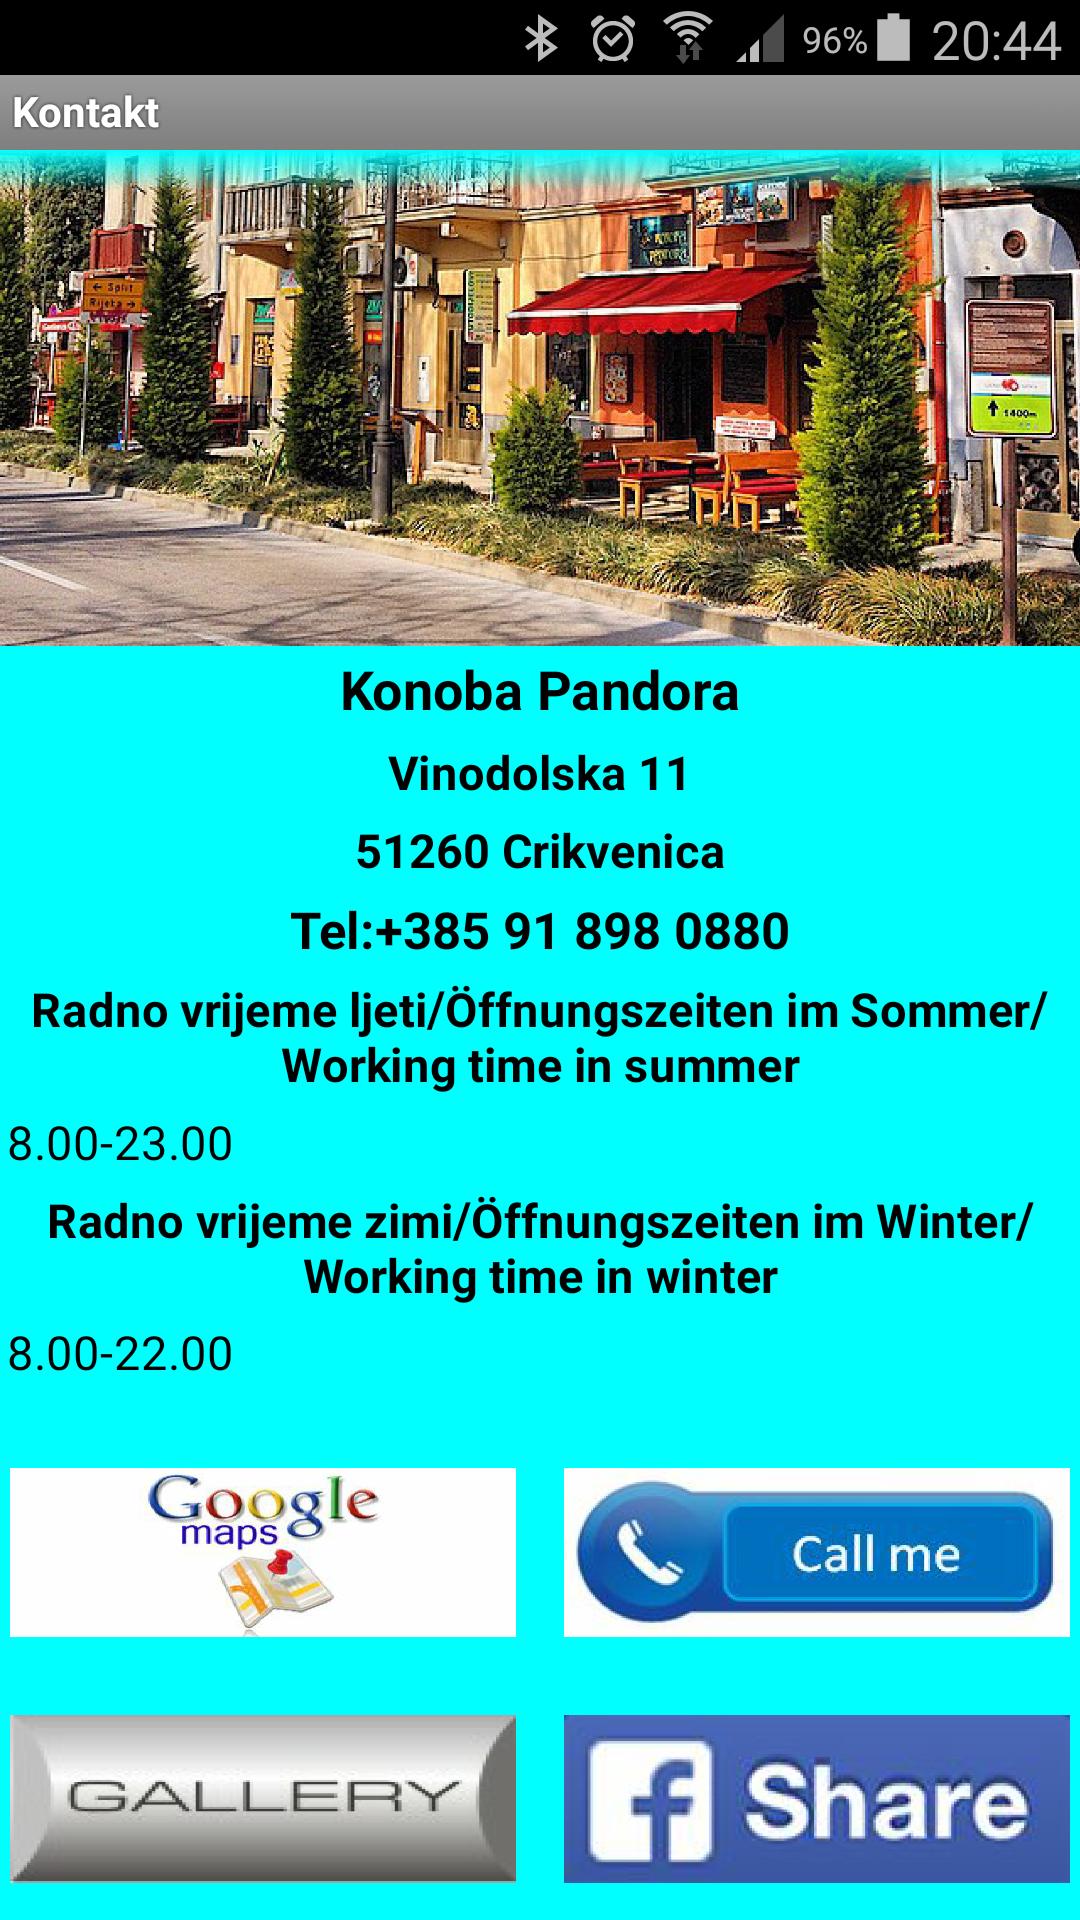 Konoba Pandora for Android - APK Download